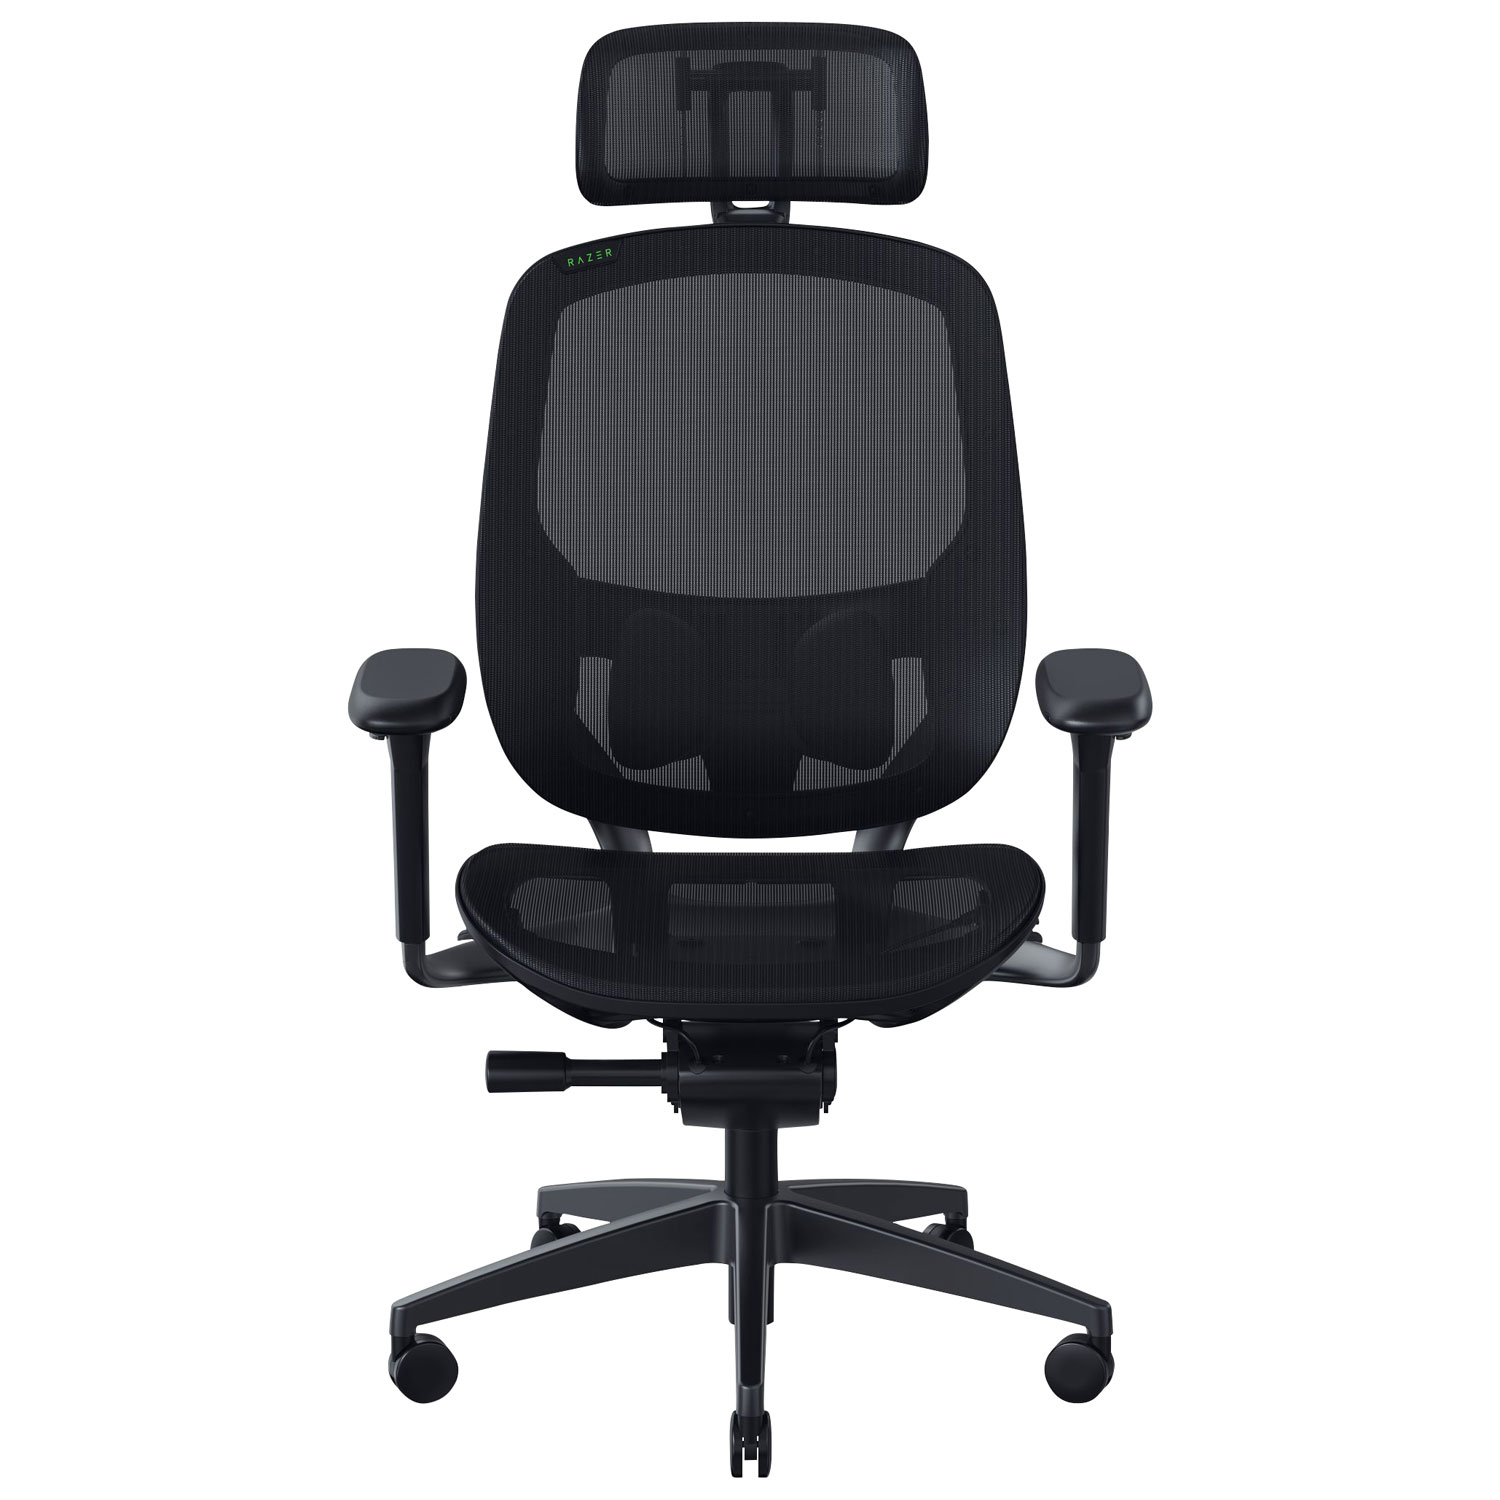 Razer Fujin Pro Ergonomic Mesh Gaming Chair - Black